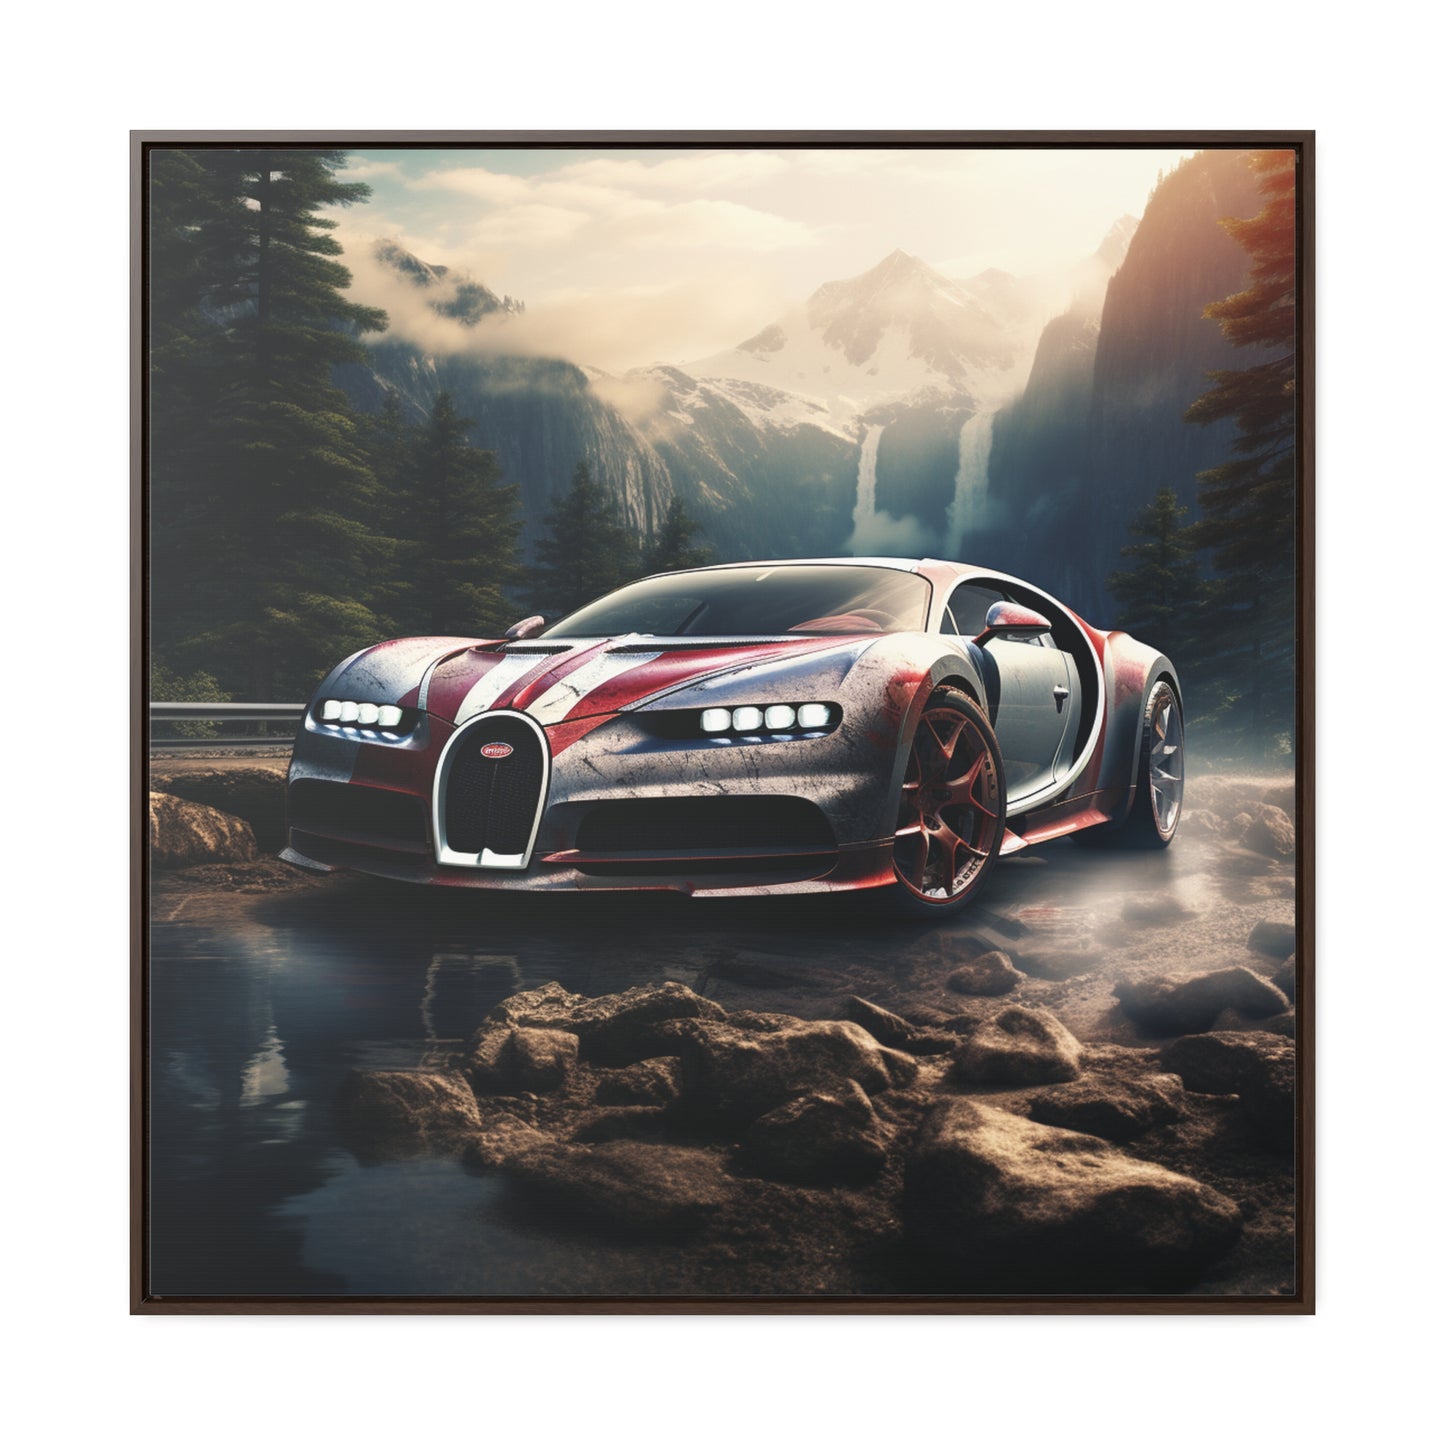 Gallery Canvas Wraps, Square Frame Bugatti Waterfall 4